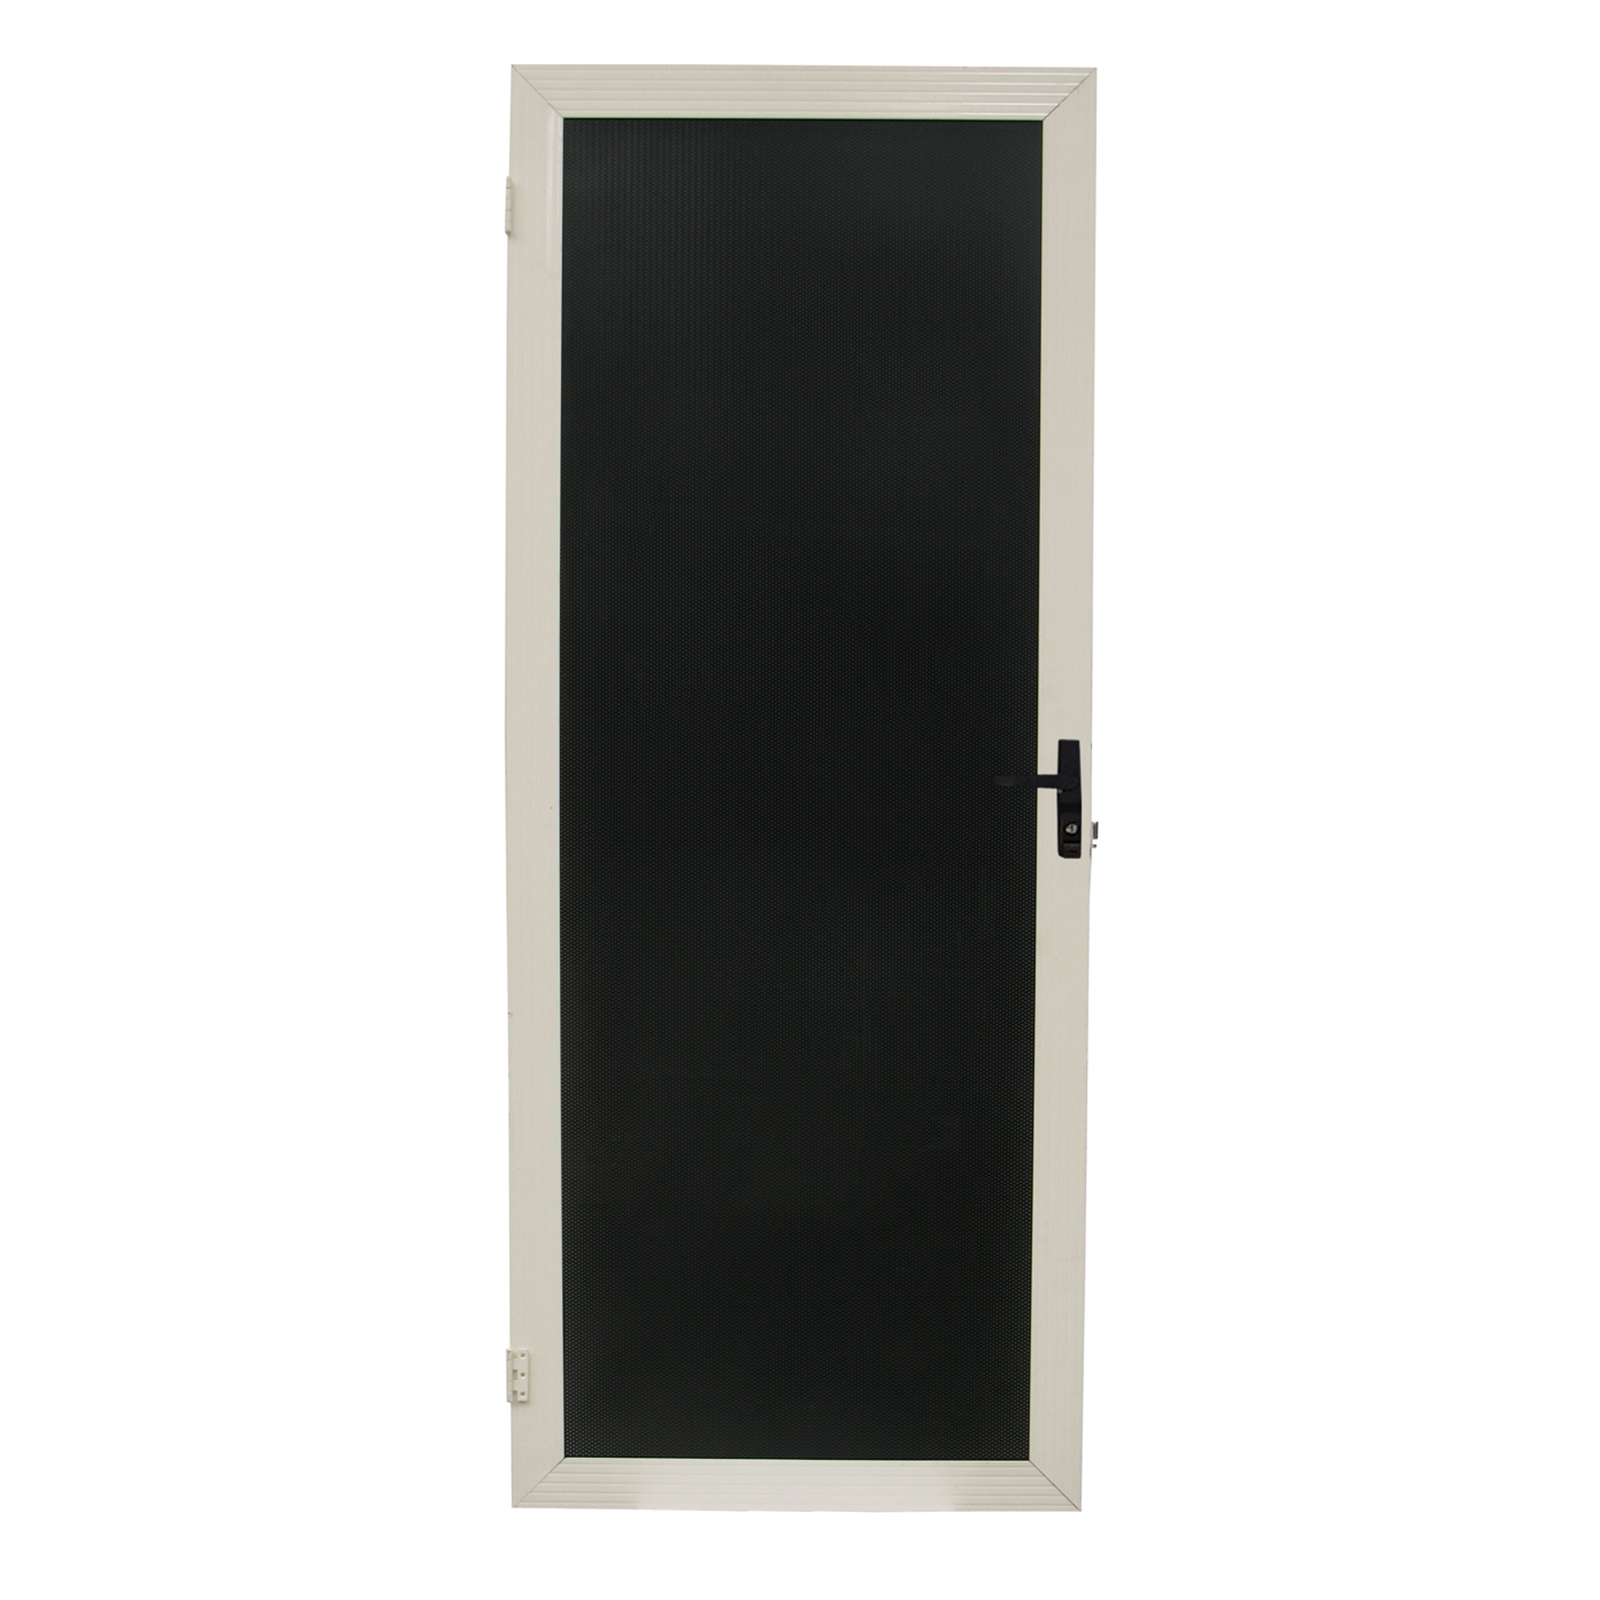 Bastion 2024 x 806mm - 2040 x 820mm White Soho Aluminium Adjustable Barrier Security Door